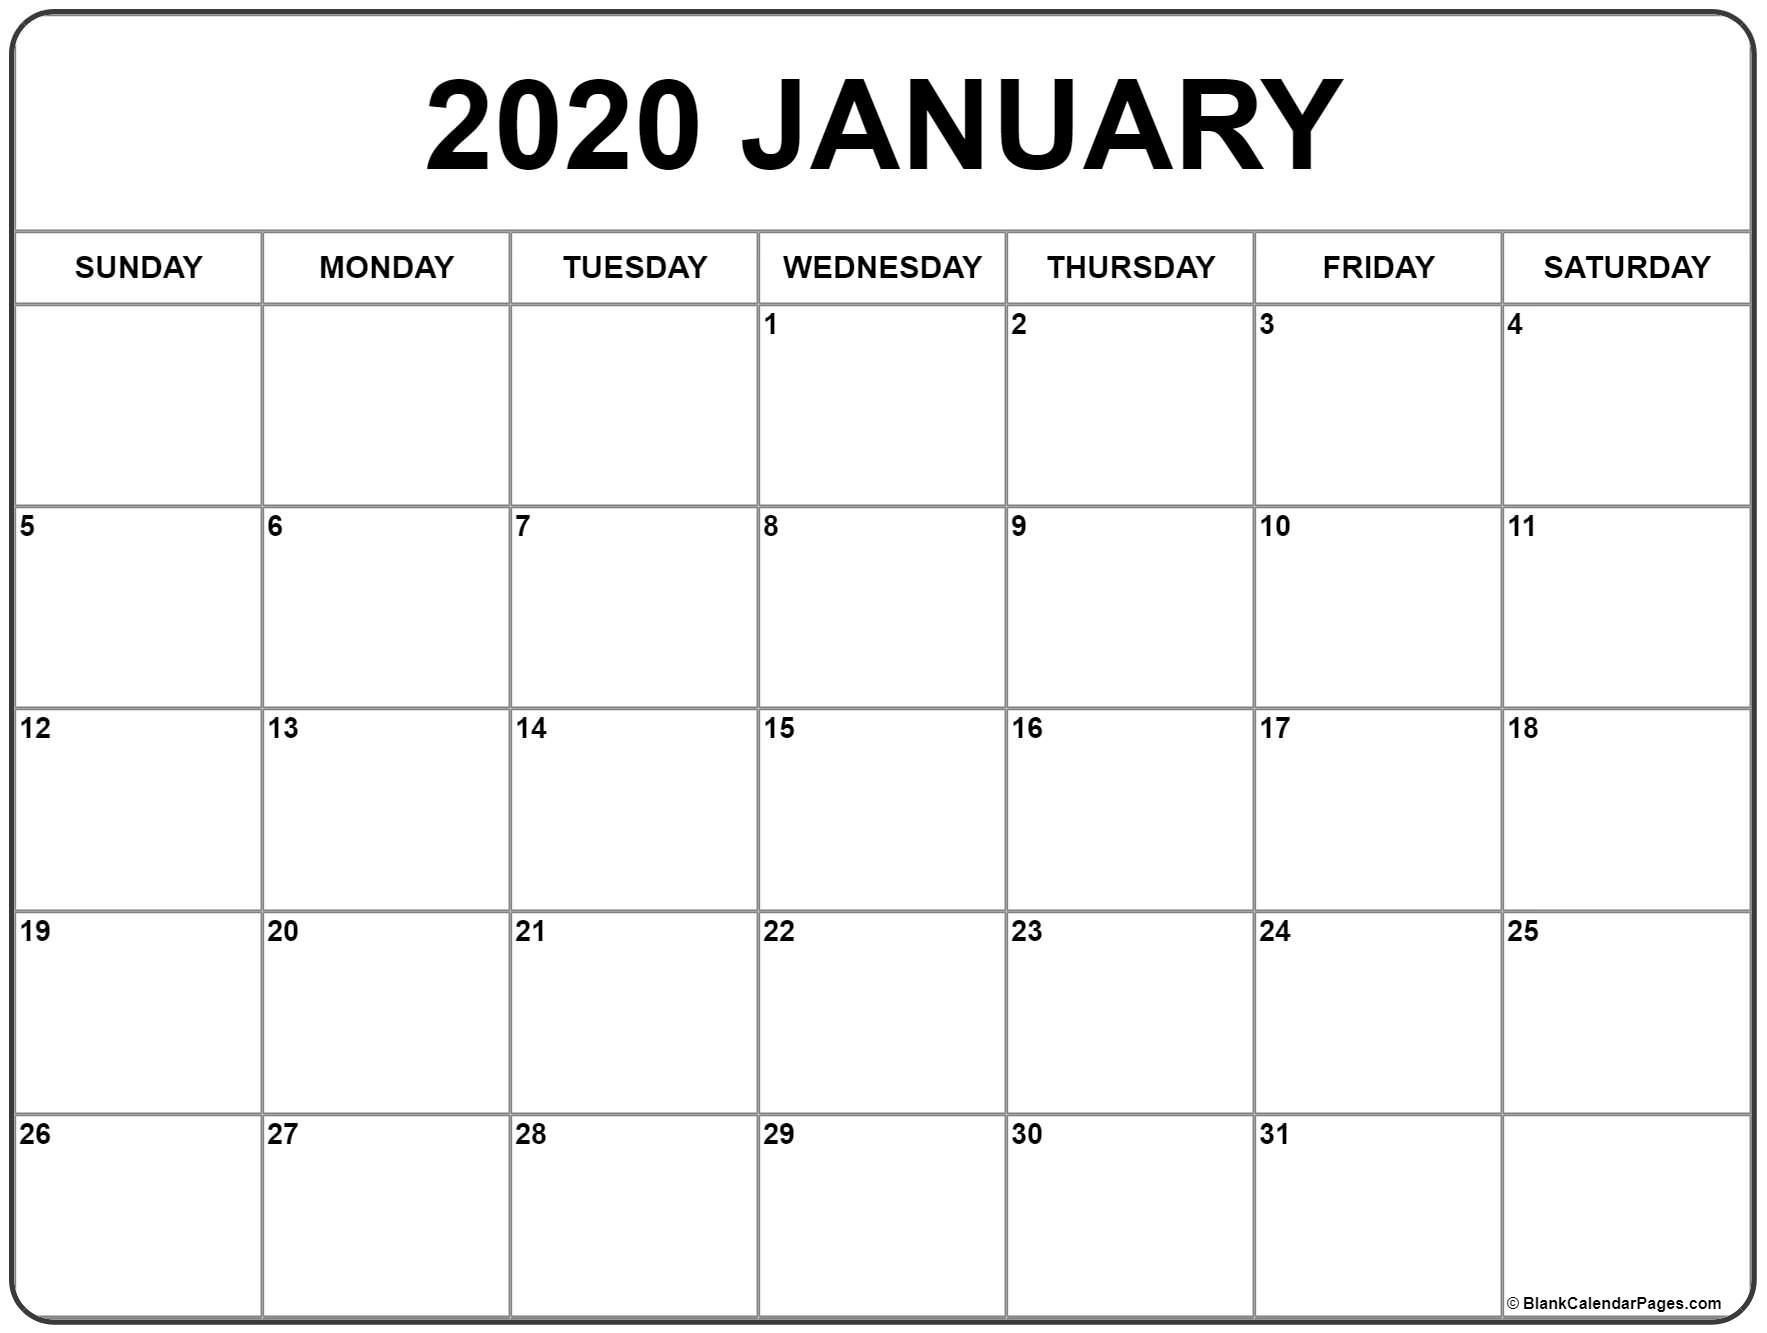 January 2020 Calendar | Free Printable Monthly Calendars  Free Monthly Calendar Print Out 2020 With Holidays